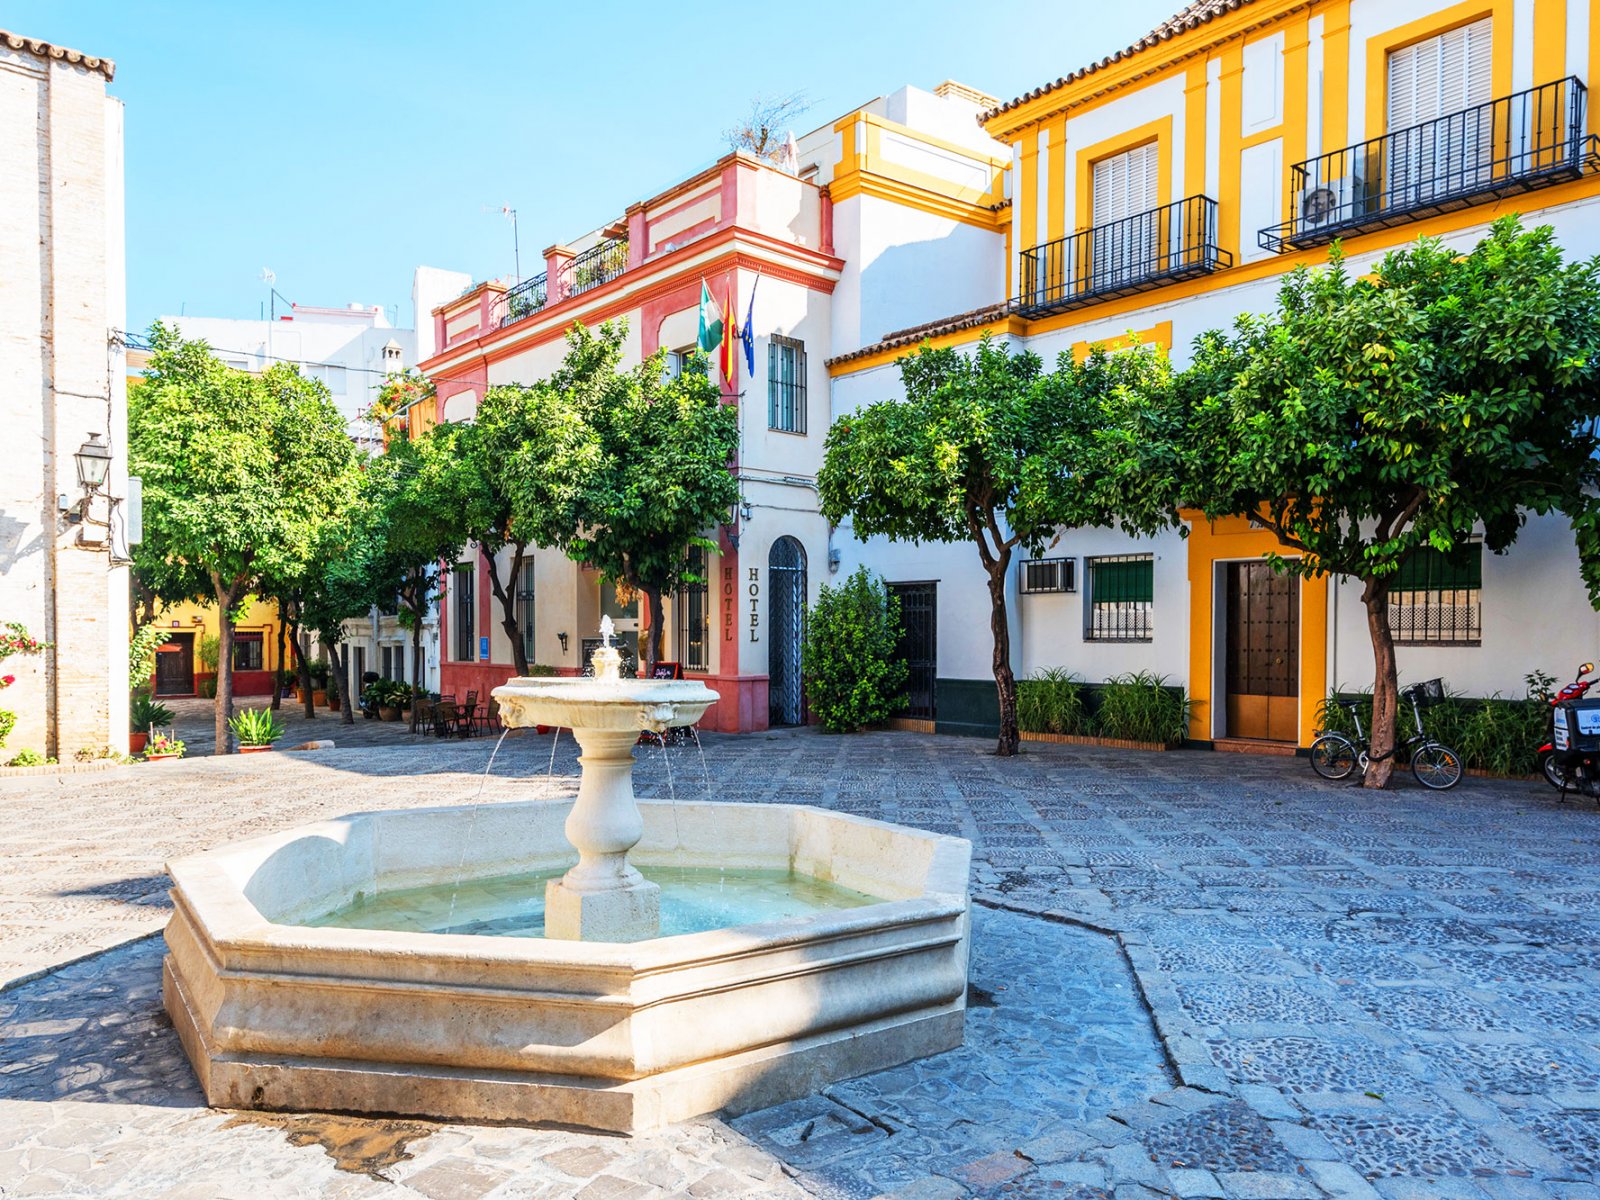 Santa-Cruz quarter, Seville